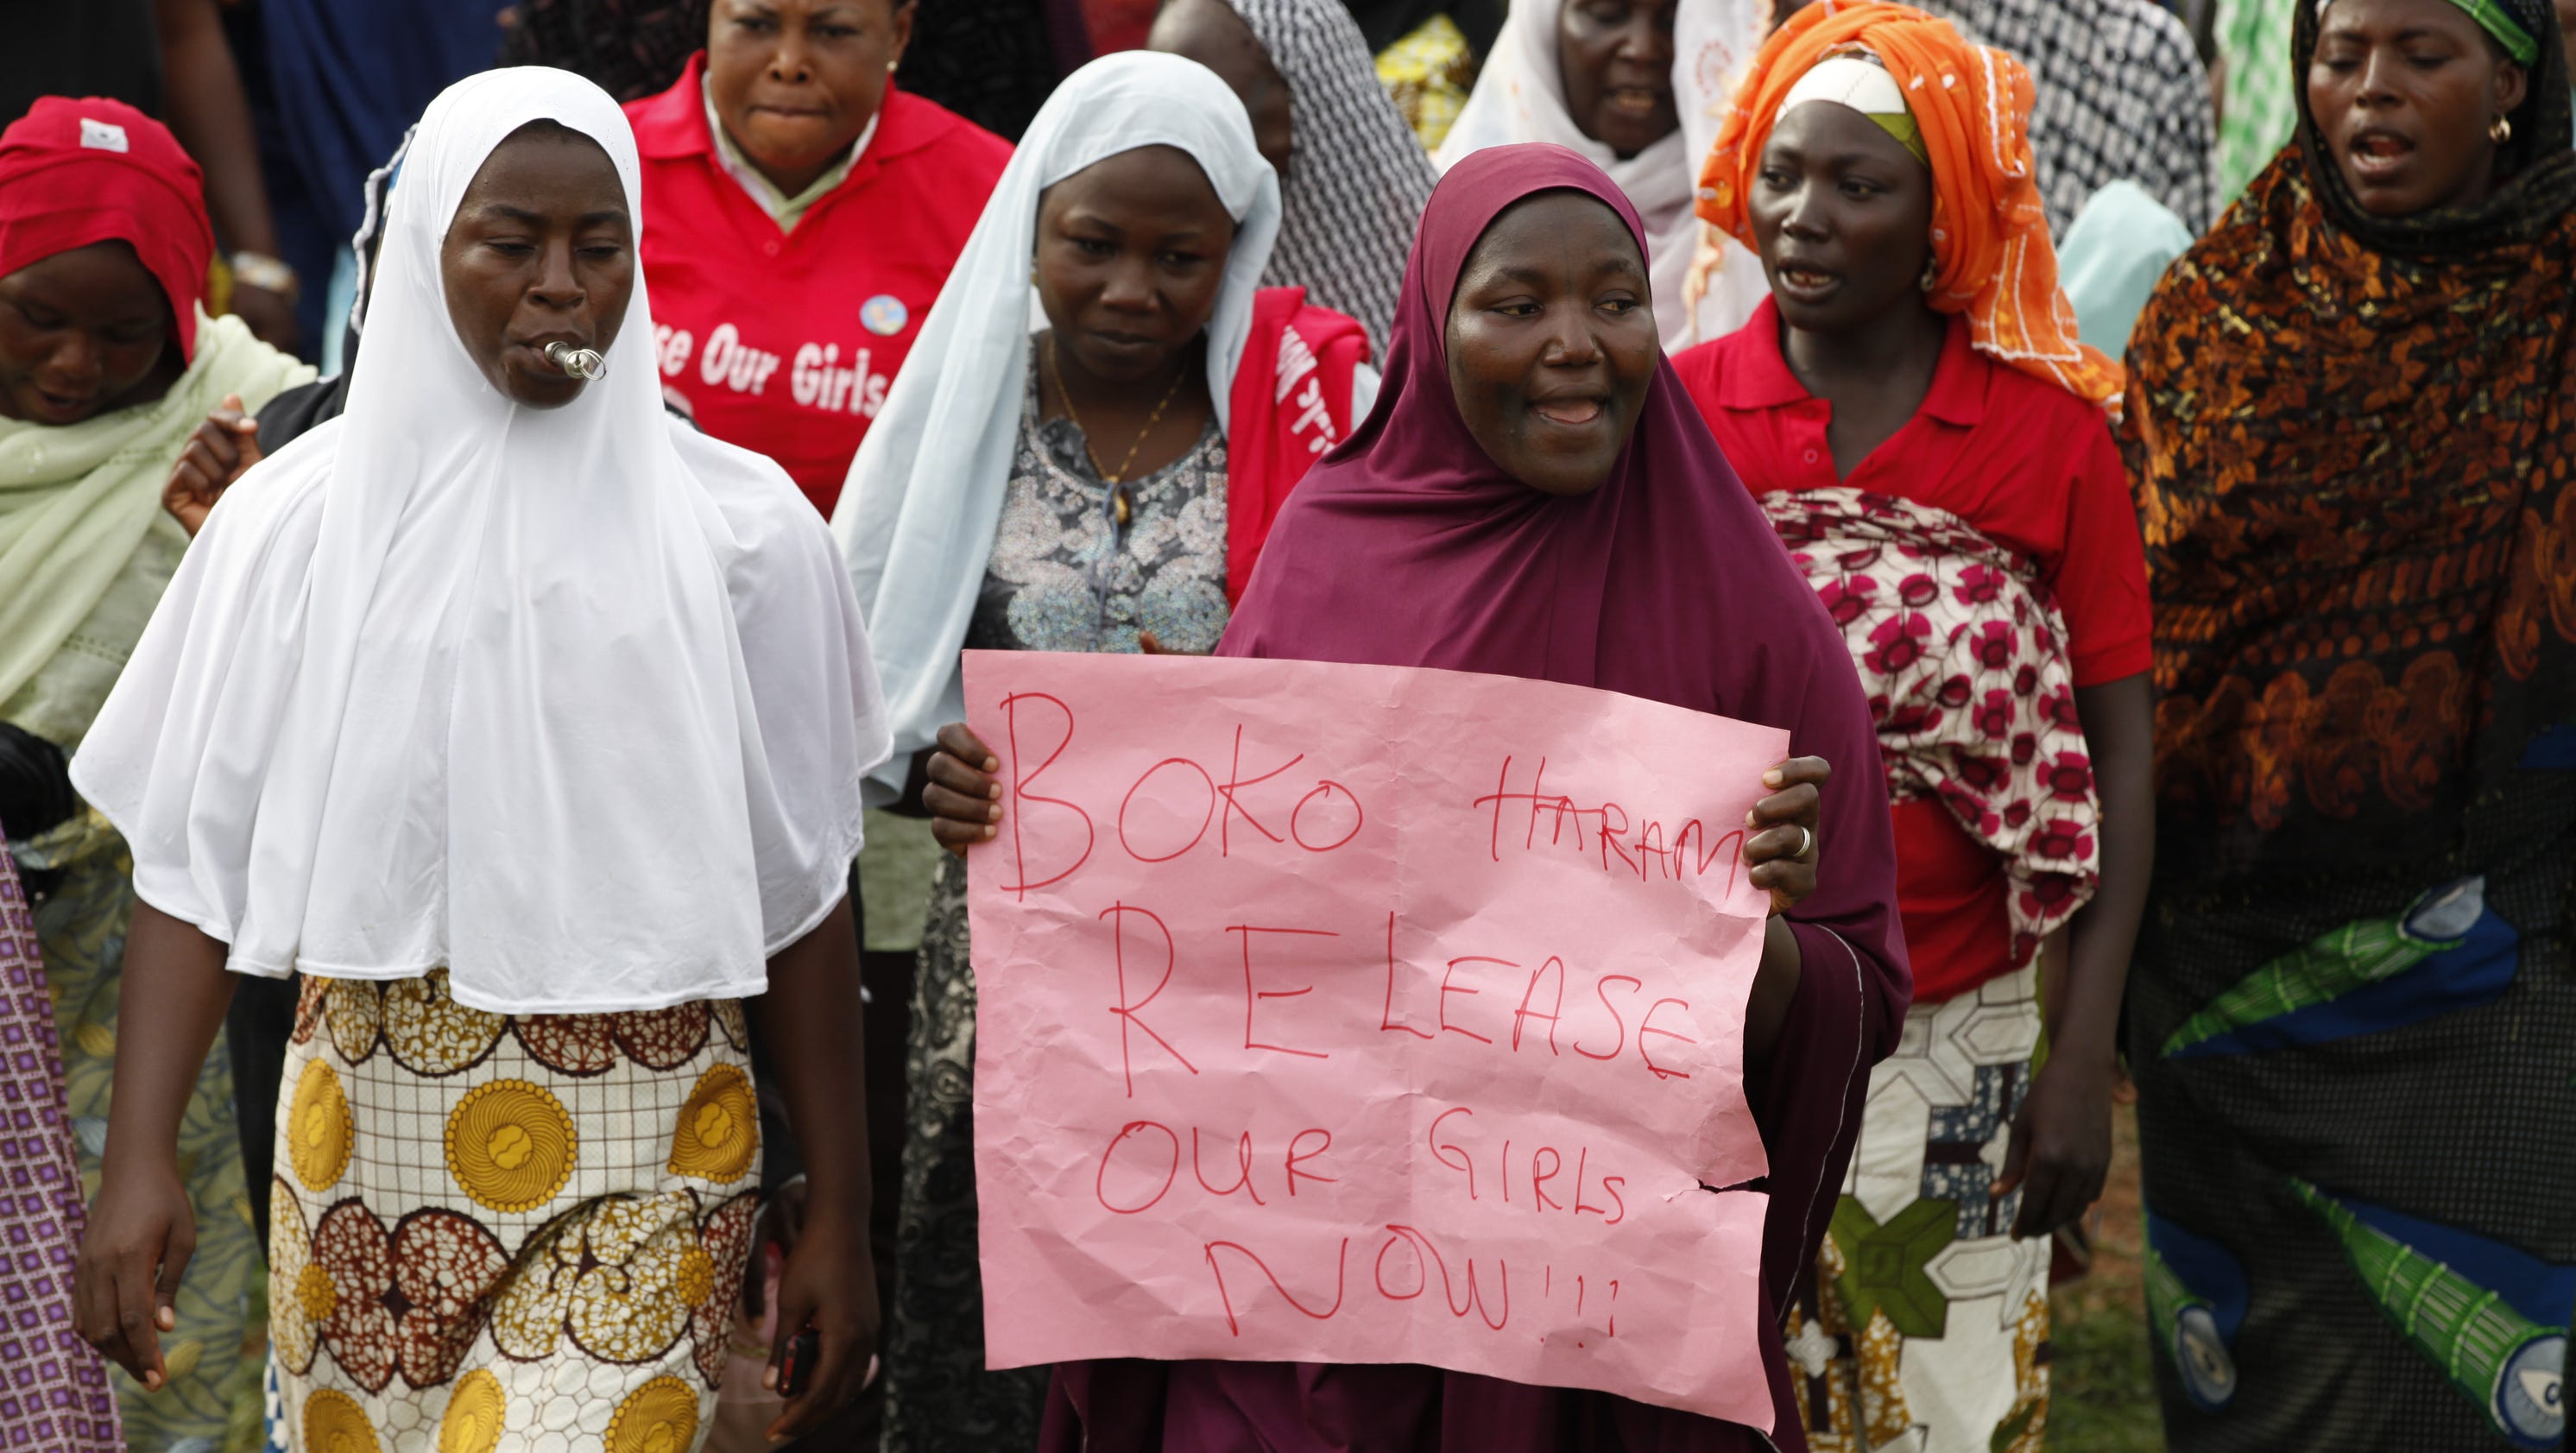 Reports: 4 Nigerian girls escape Boko Haram3200 x 1680